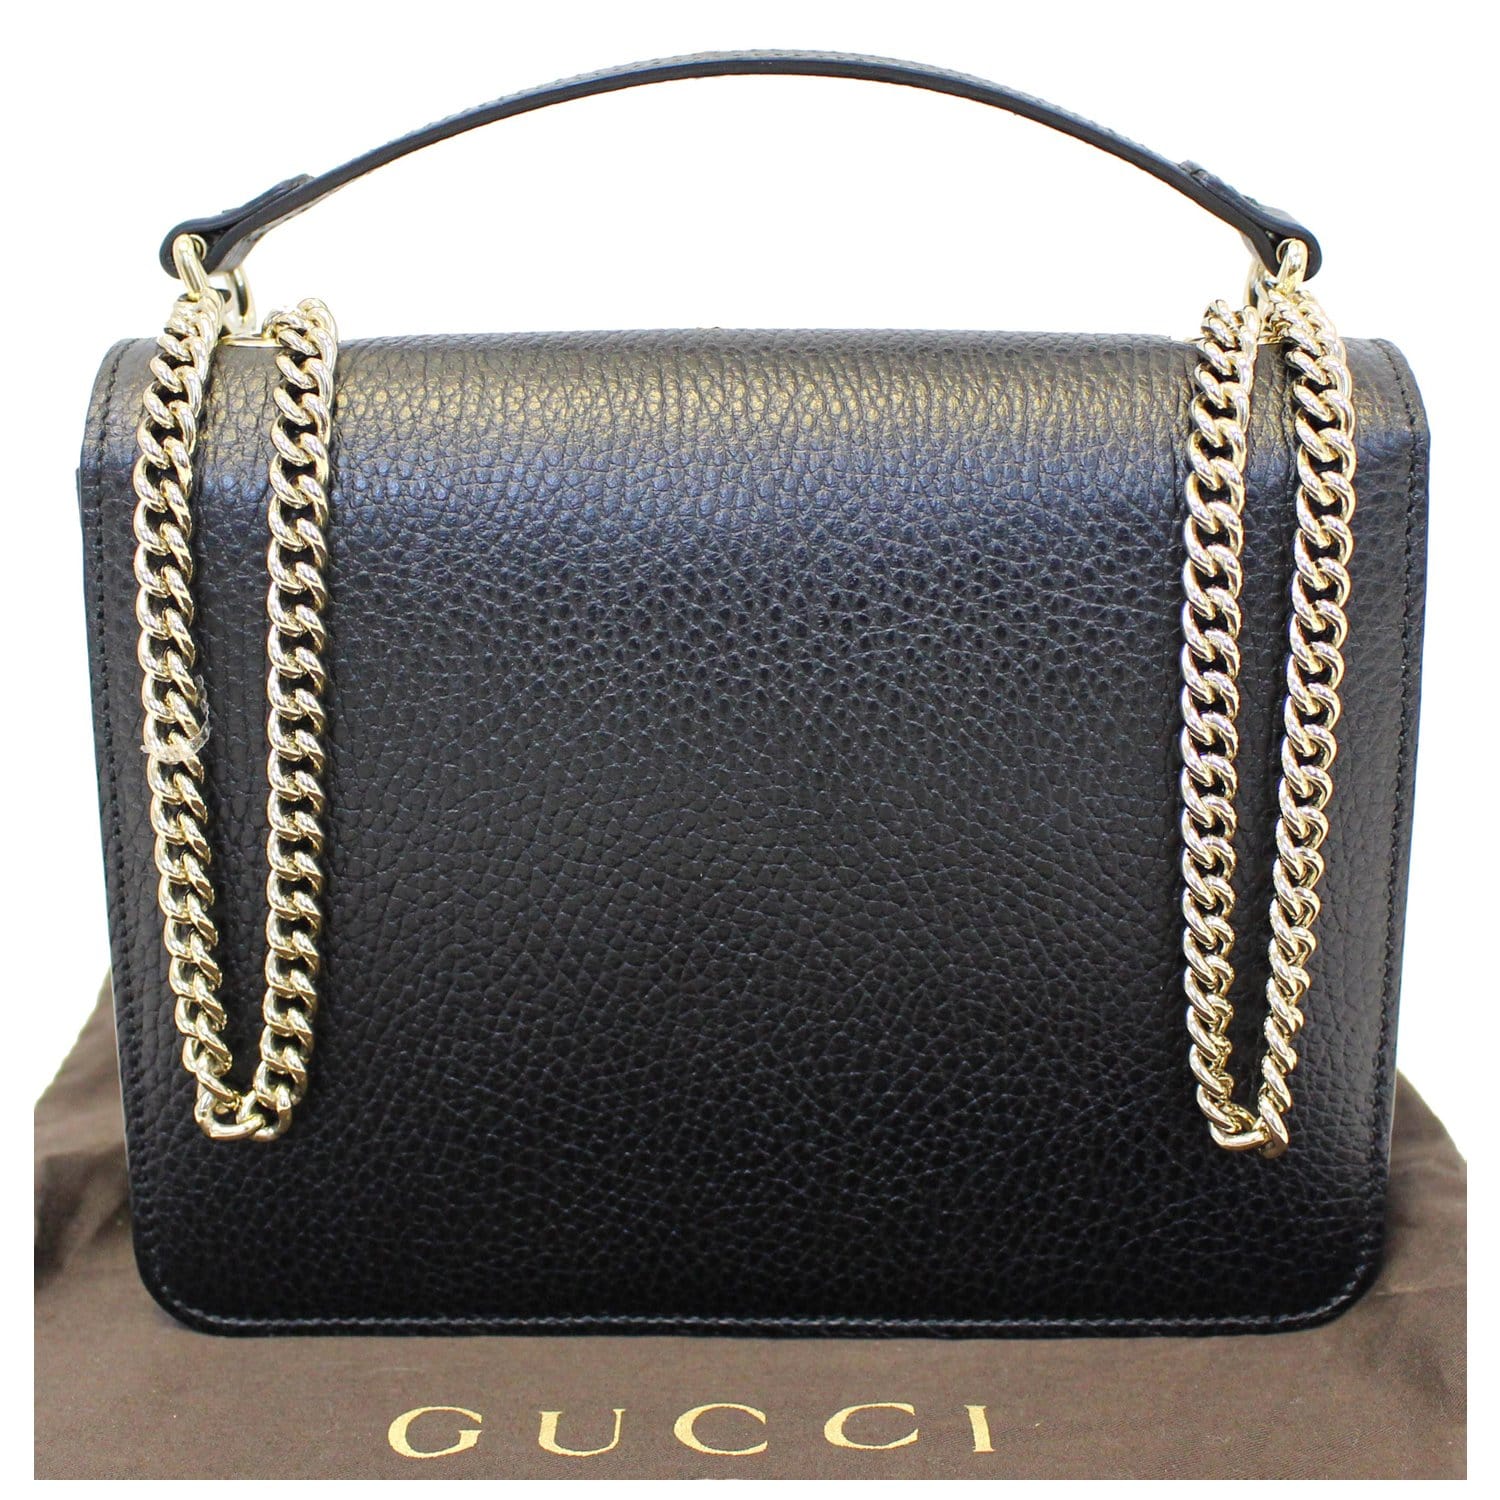 Gucci Black Leather Interlocking G Shoulder Bag Gucci